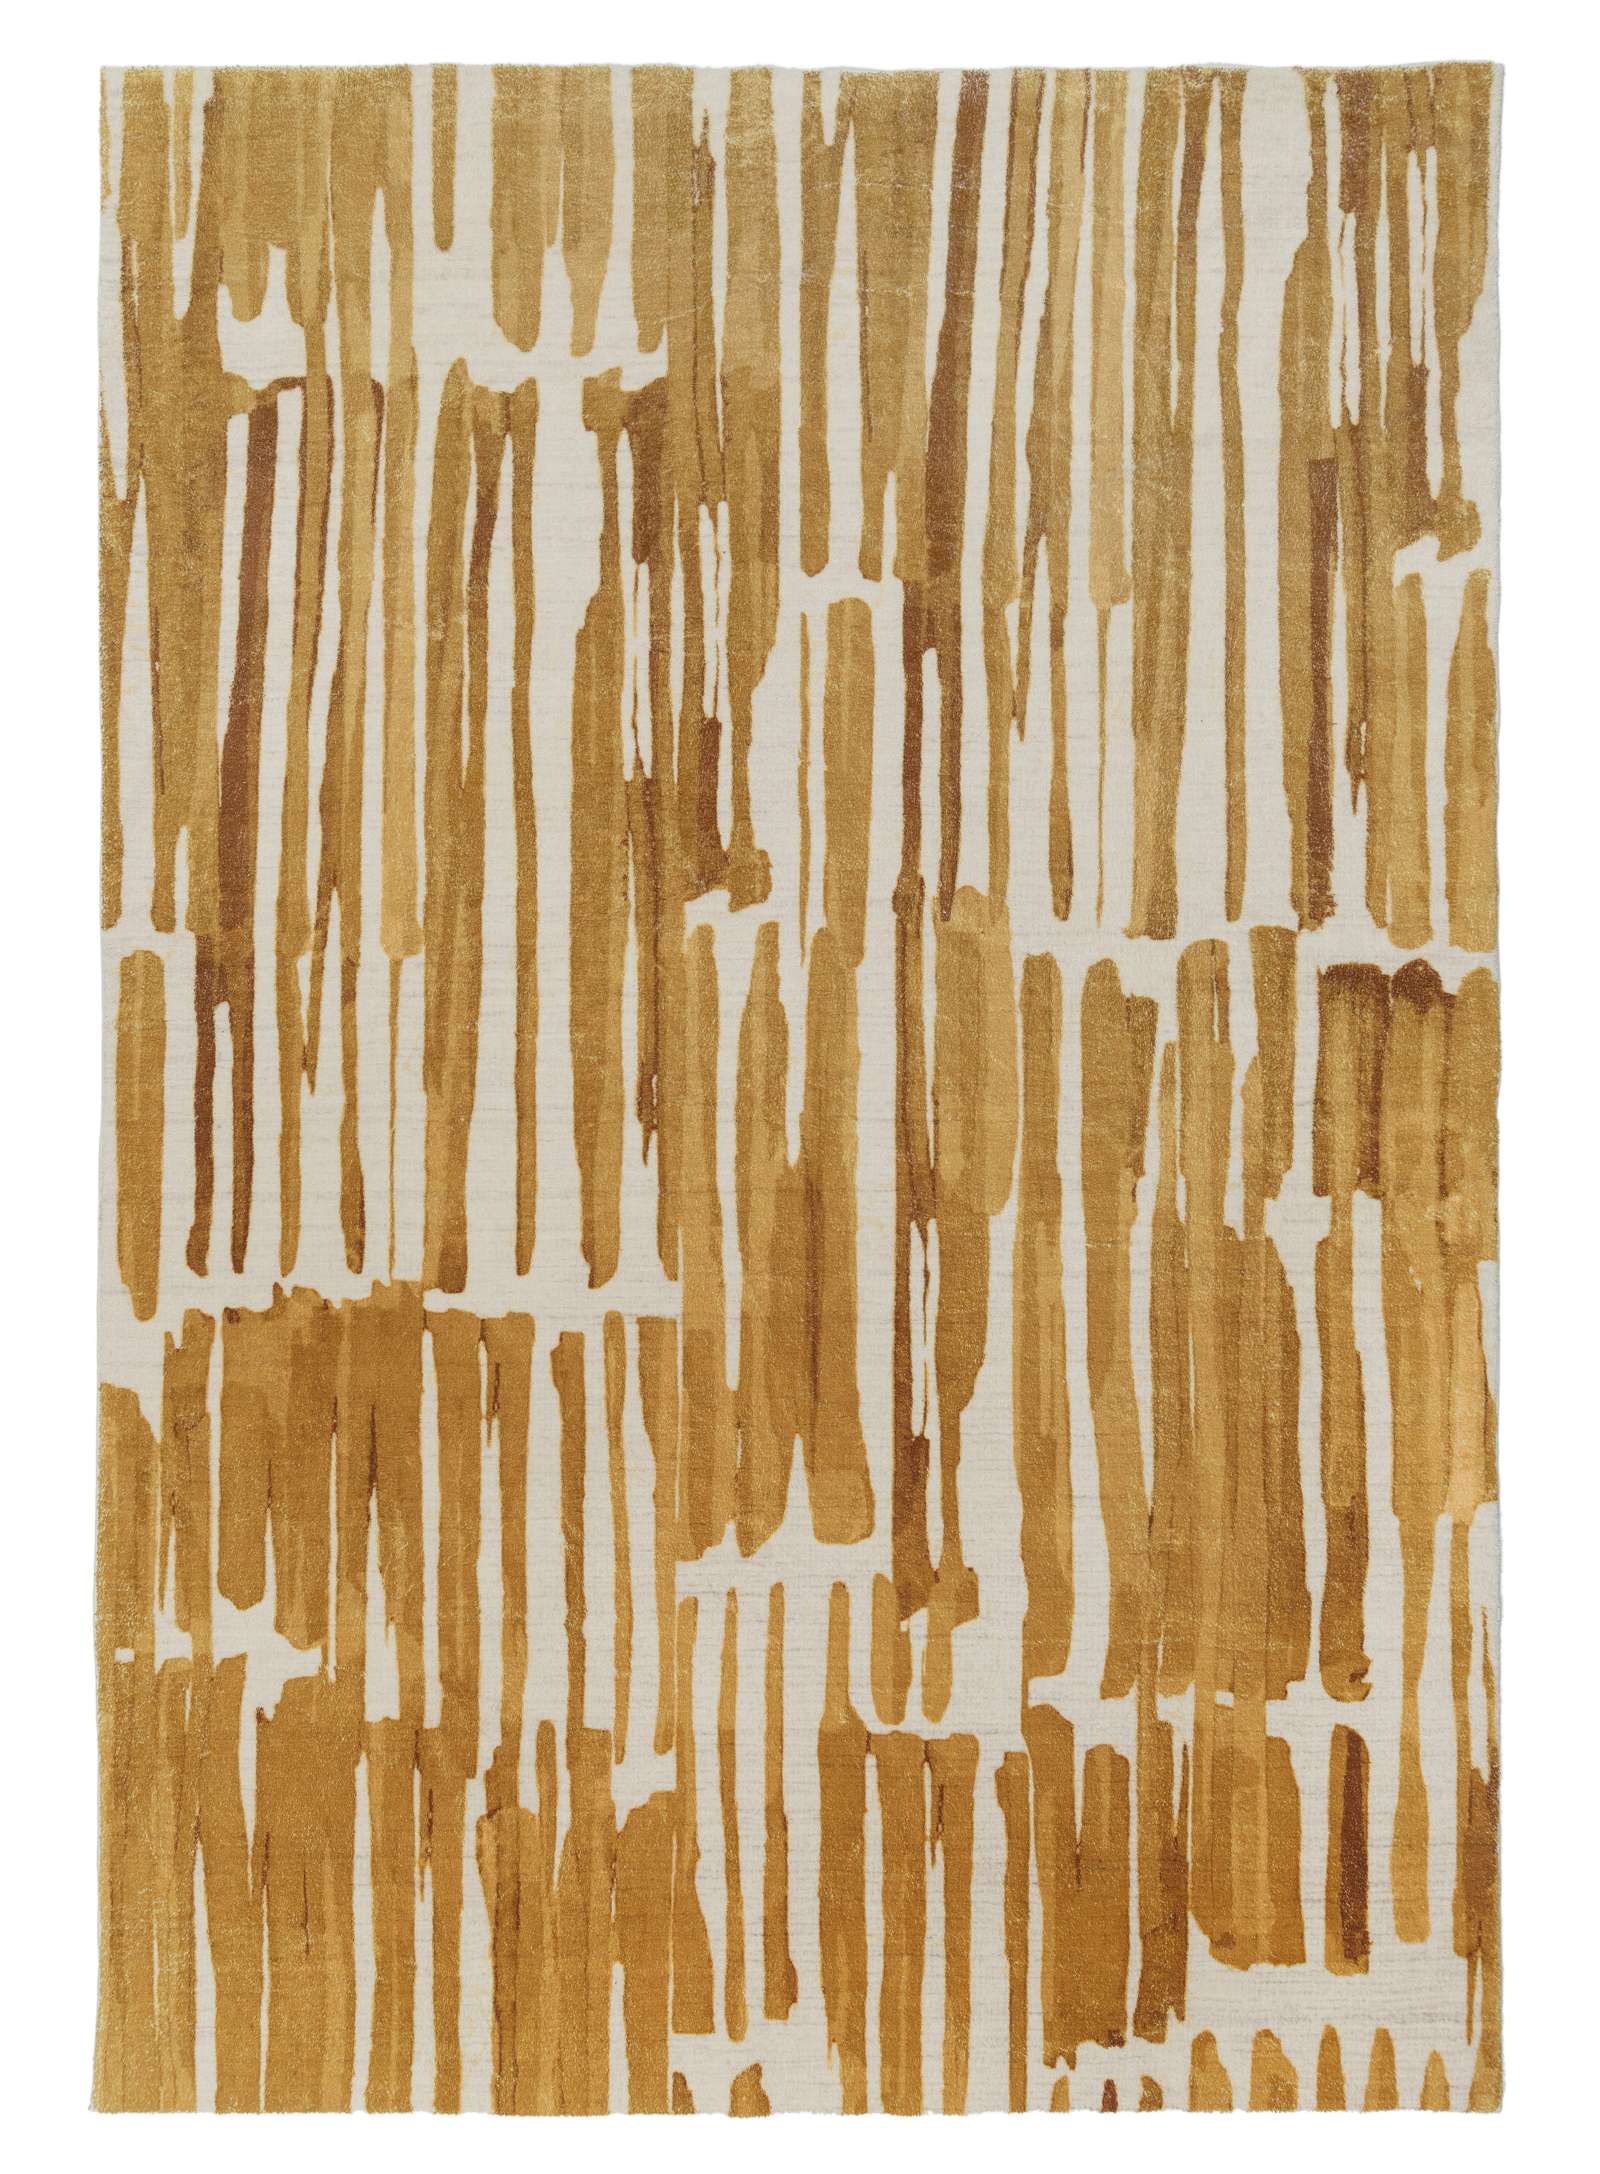 Loopsie RUGS 180cm x 120cm Omaya Gold and Ivory Striped Washable Rug